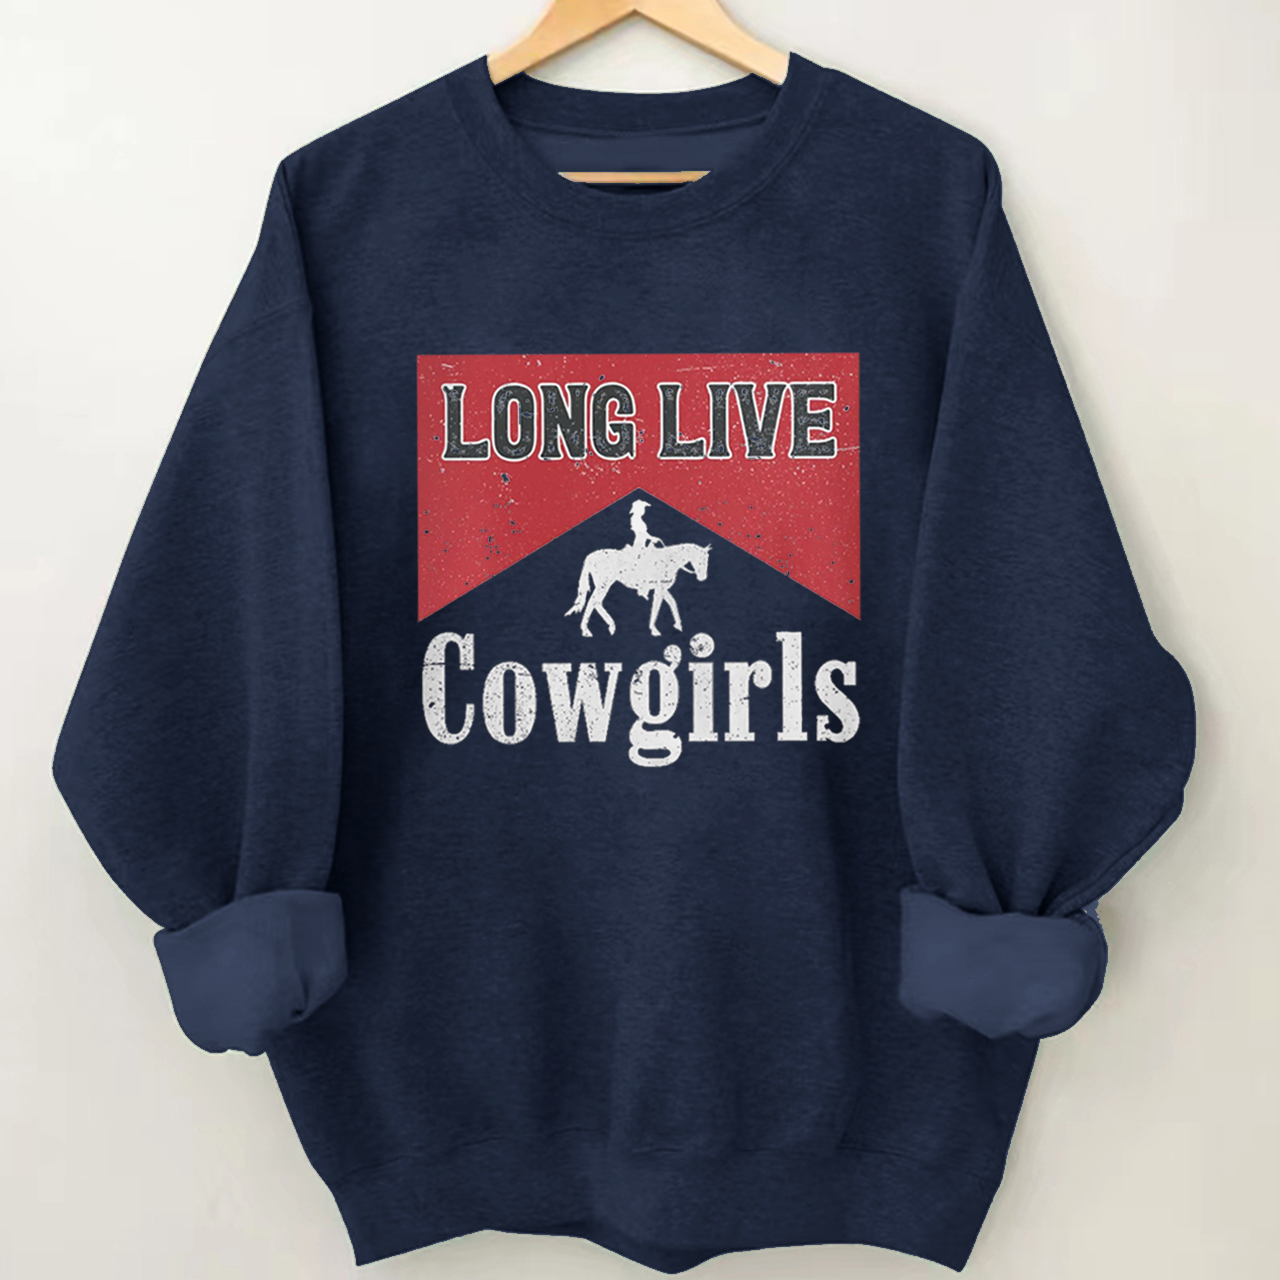 Long Live Cowgirls Printed Sweatshirt